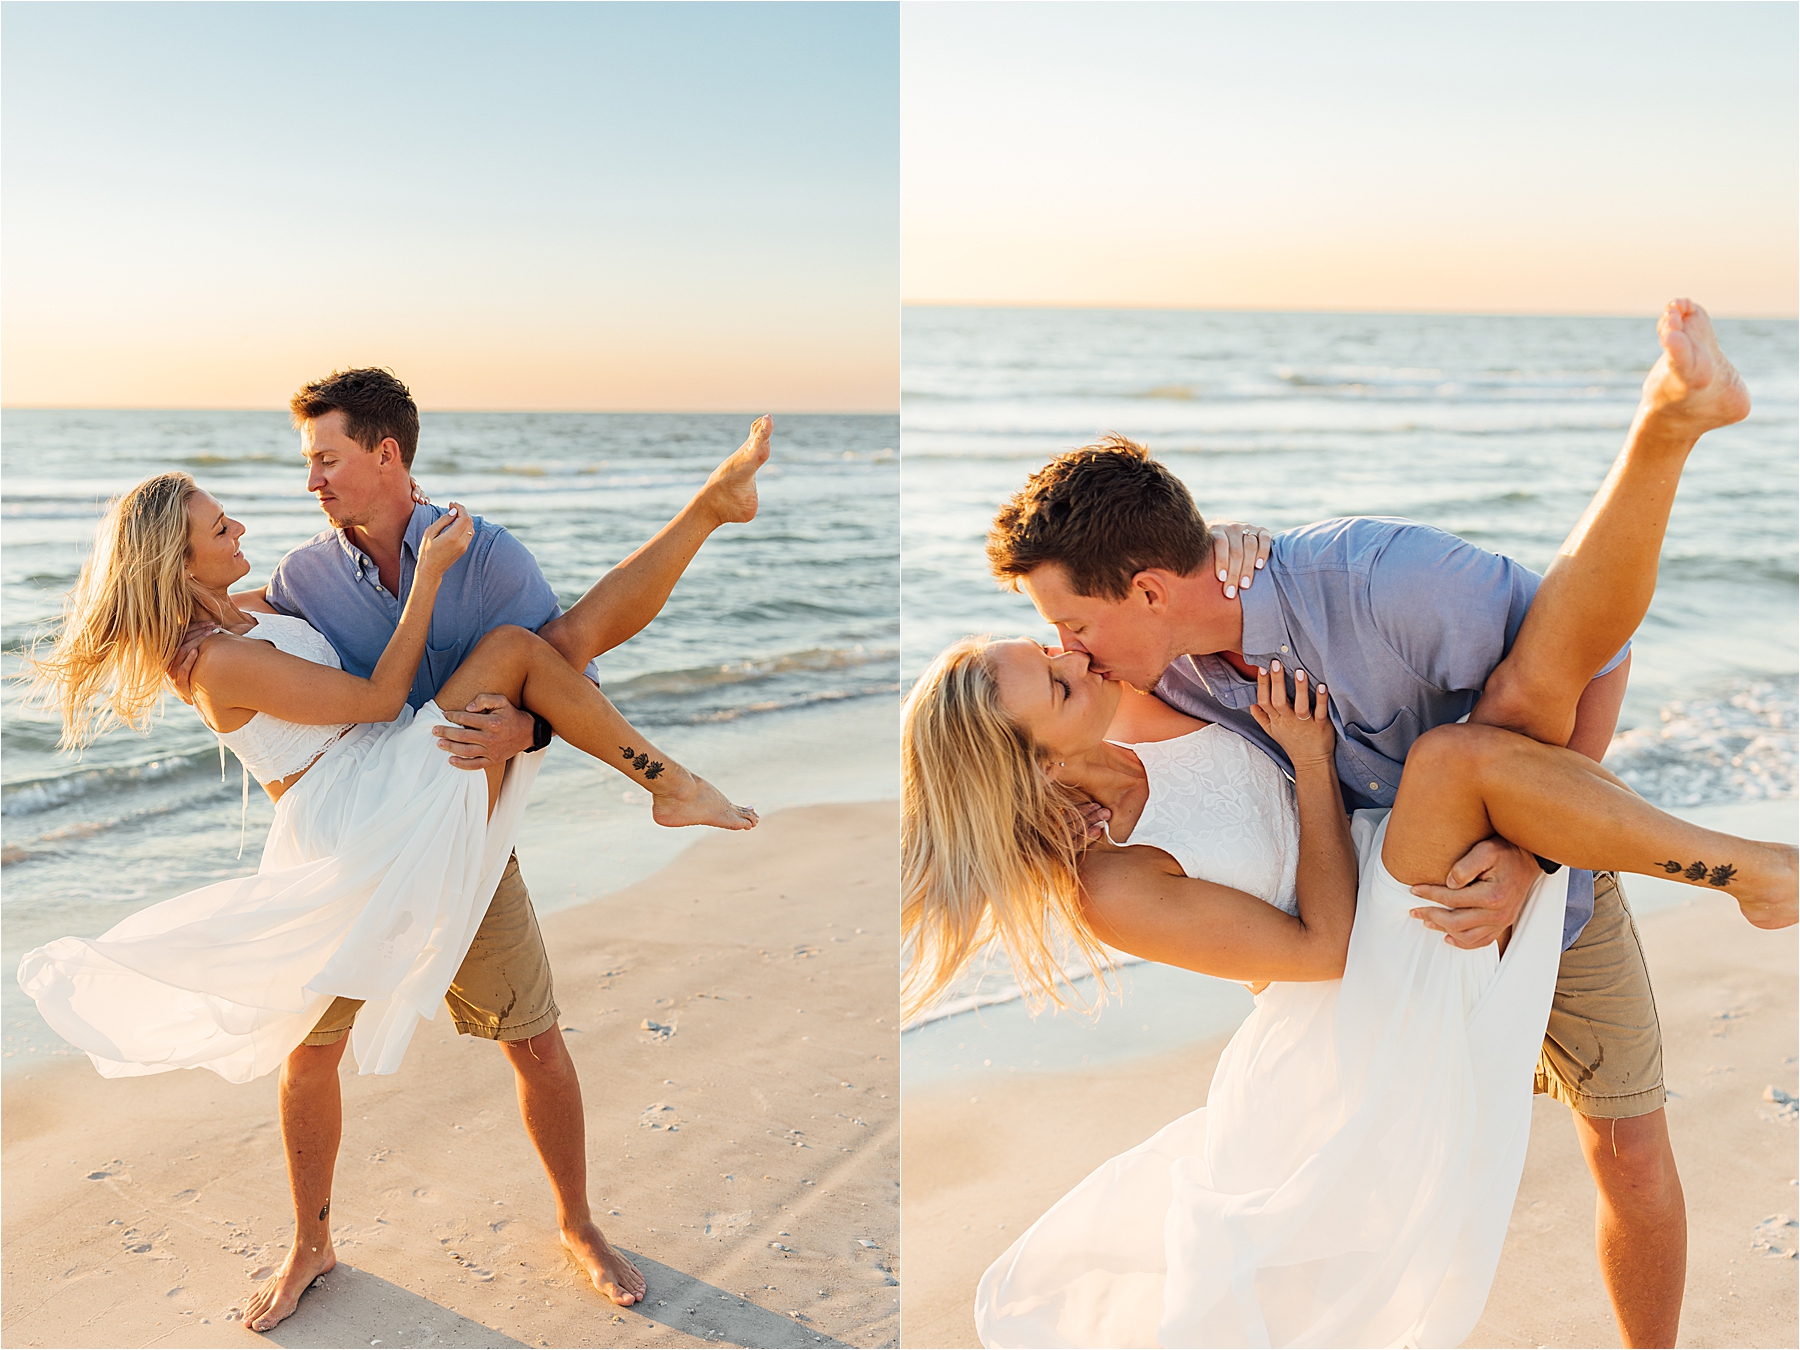 Dip kiss engagement photos on the beach